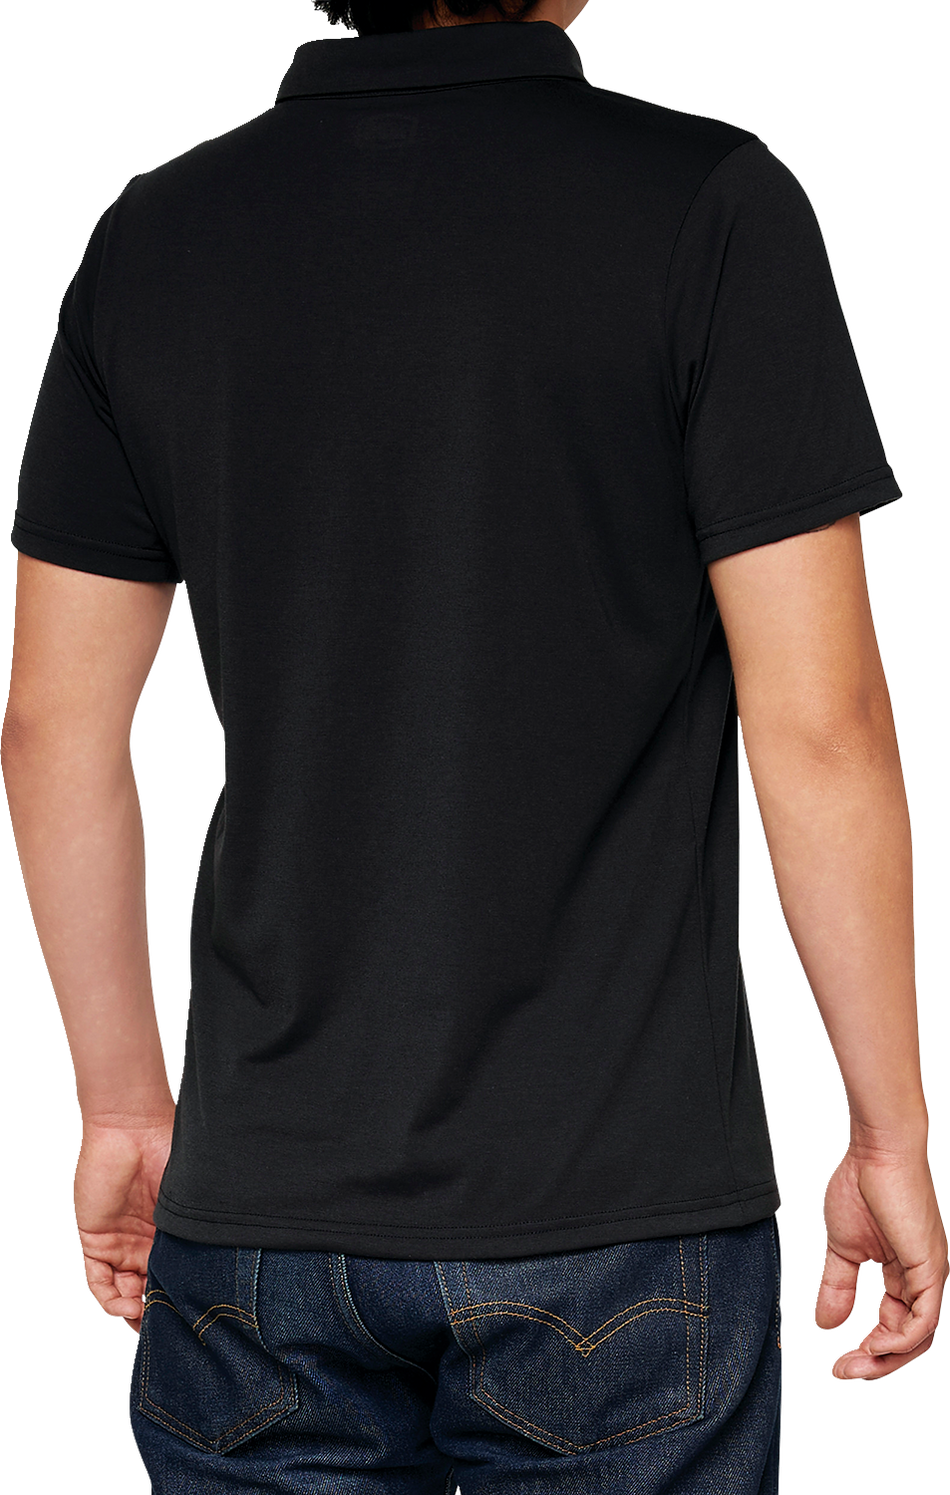 100% Corpo Polo Shirt - Black/Gray - Medium 35019-057-11